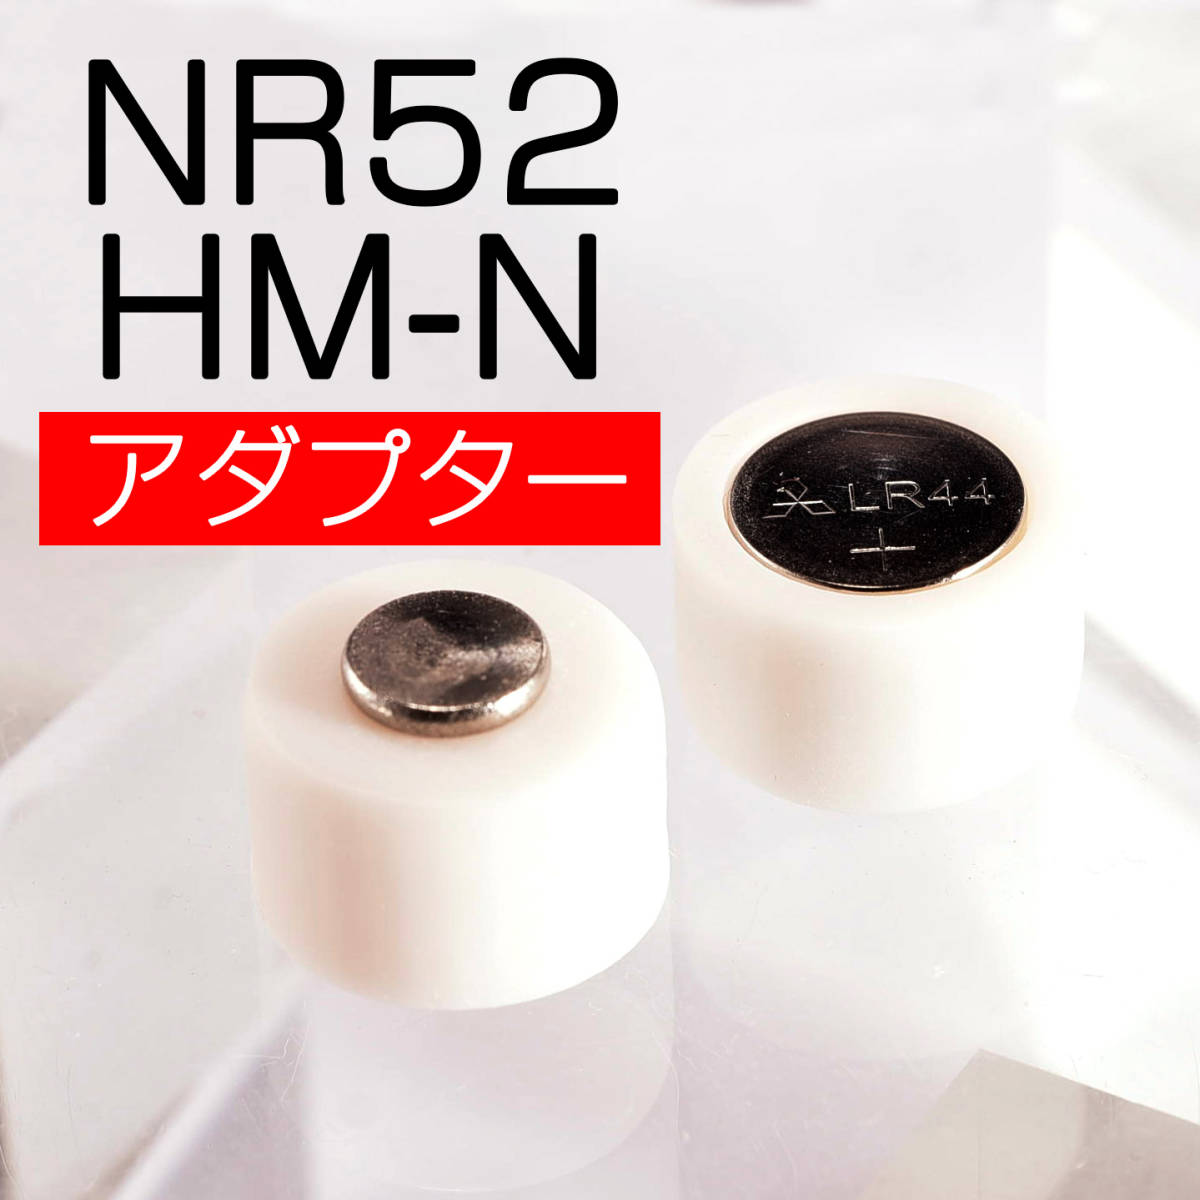 NR52 HM-N 2 шт. комплект батарейка адаптор LR44 SR44 Canon te-toE/ matic Olympus EC ECR ED высокий matic E/F Yashica электро 35gx